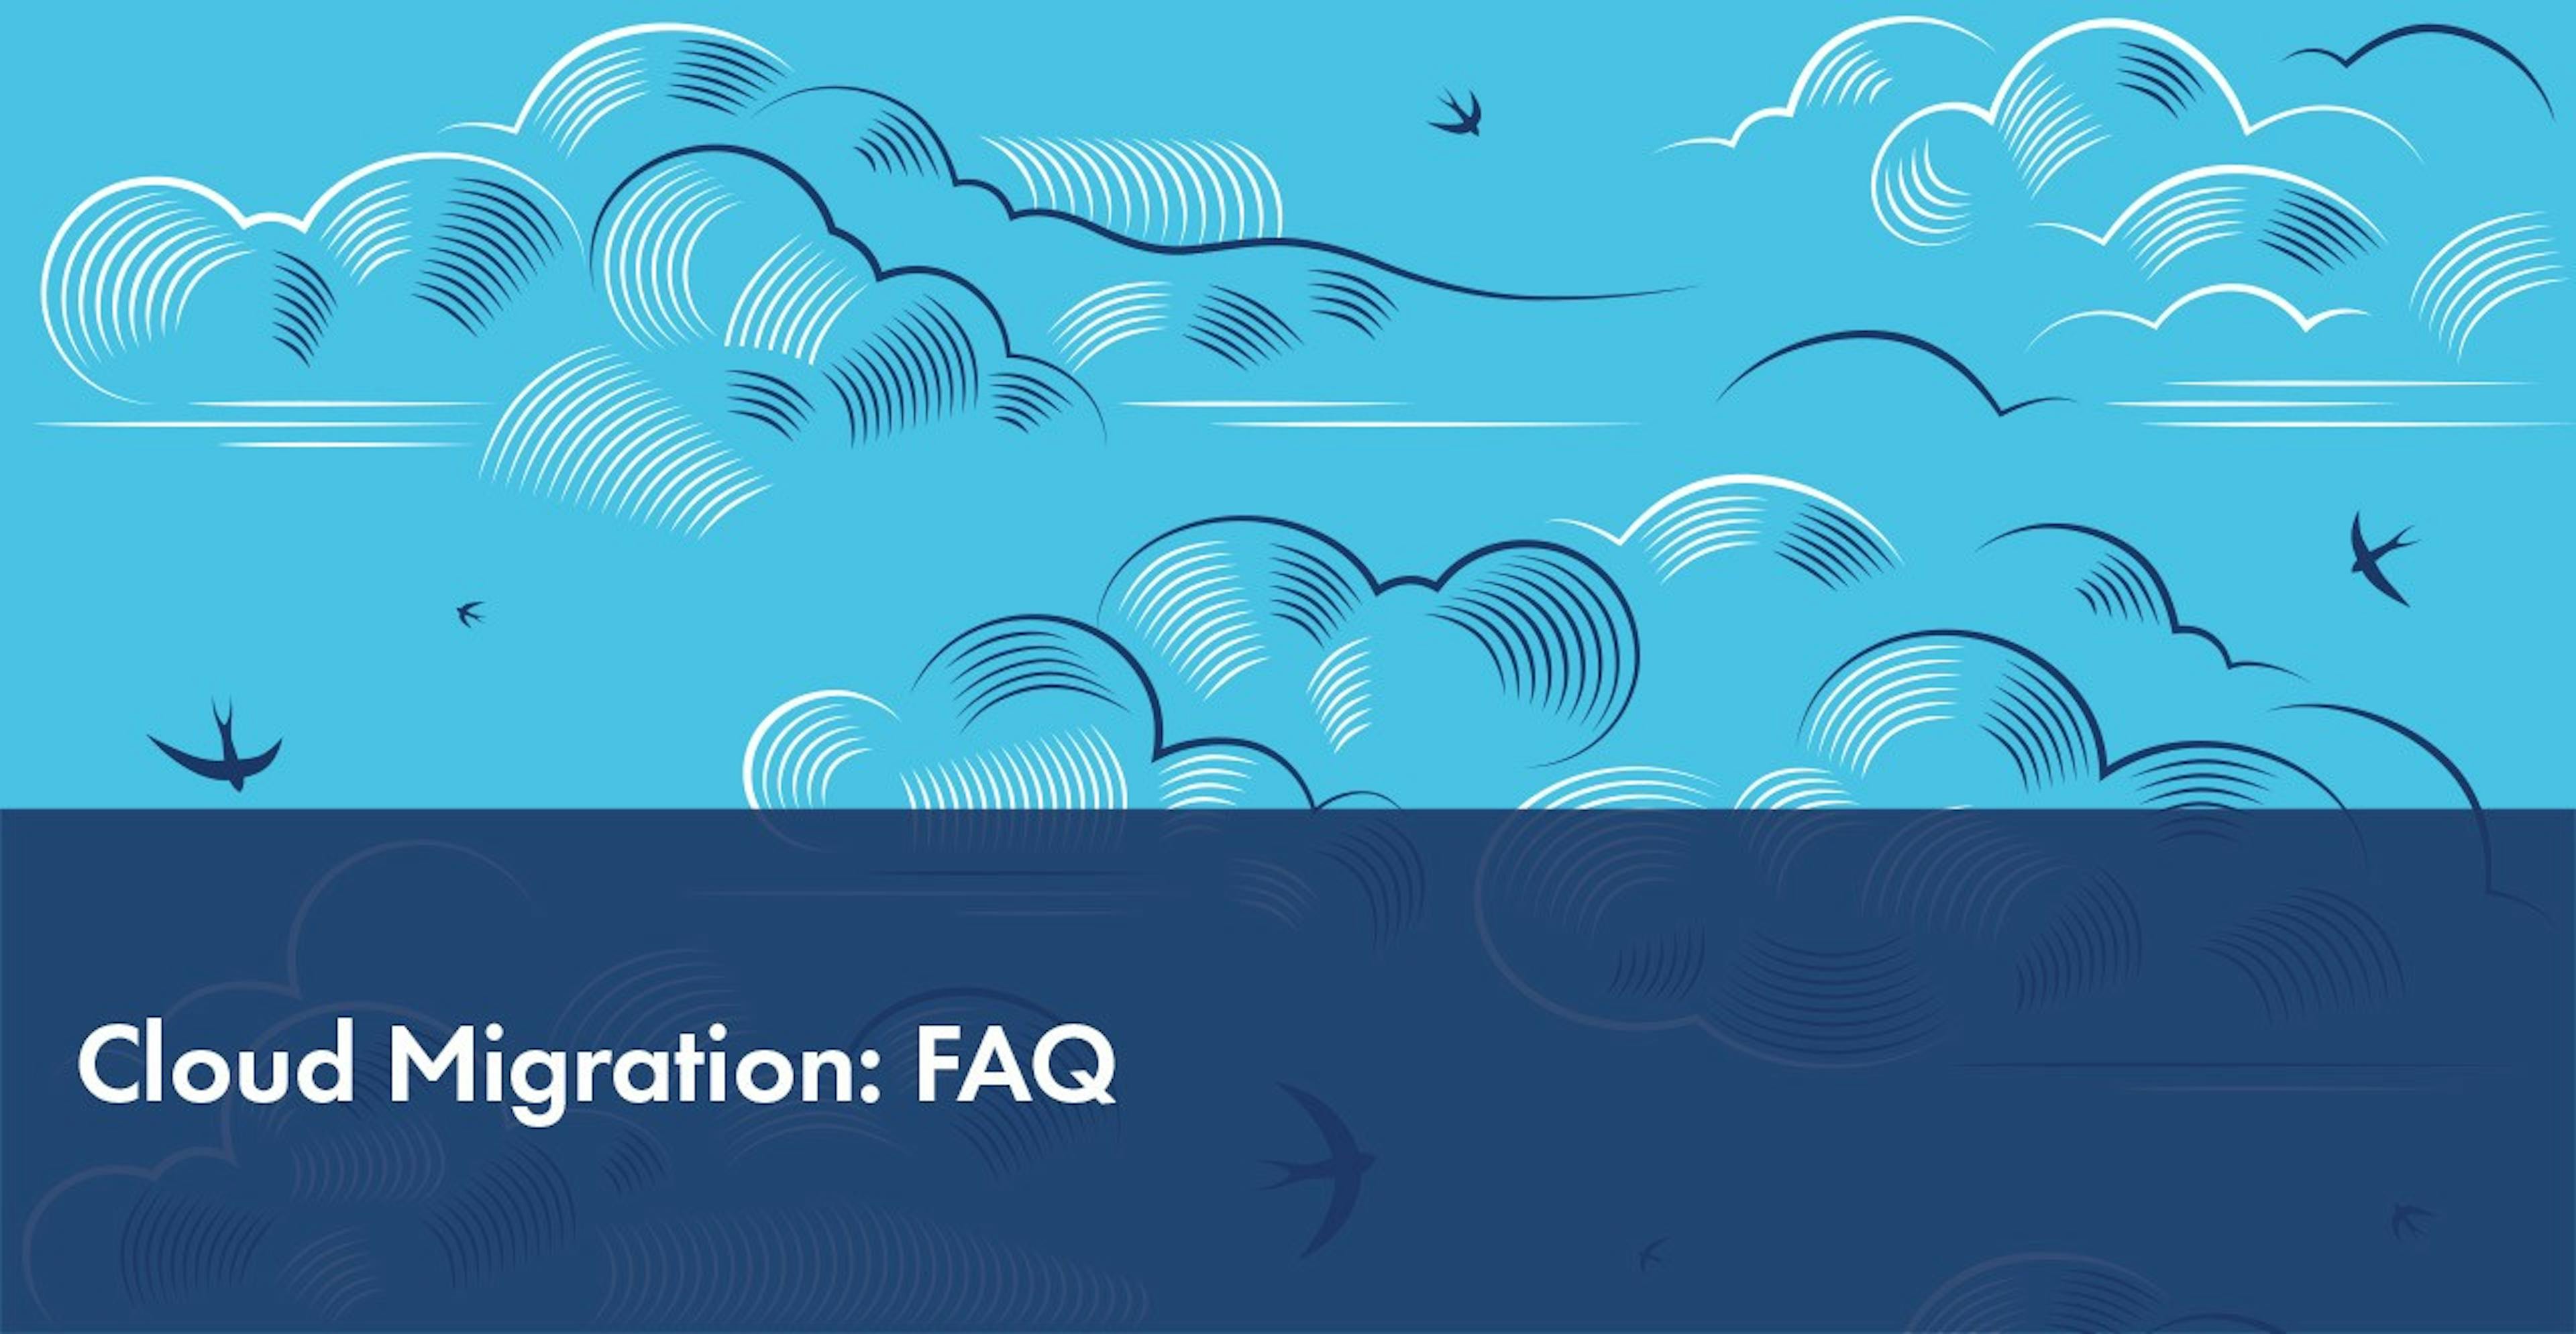 featured image - Cloud Migration: FAQ